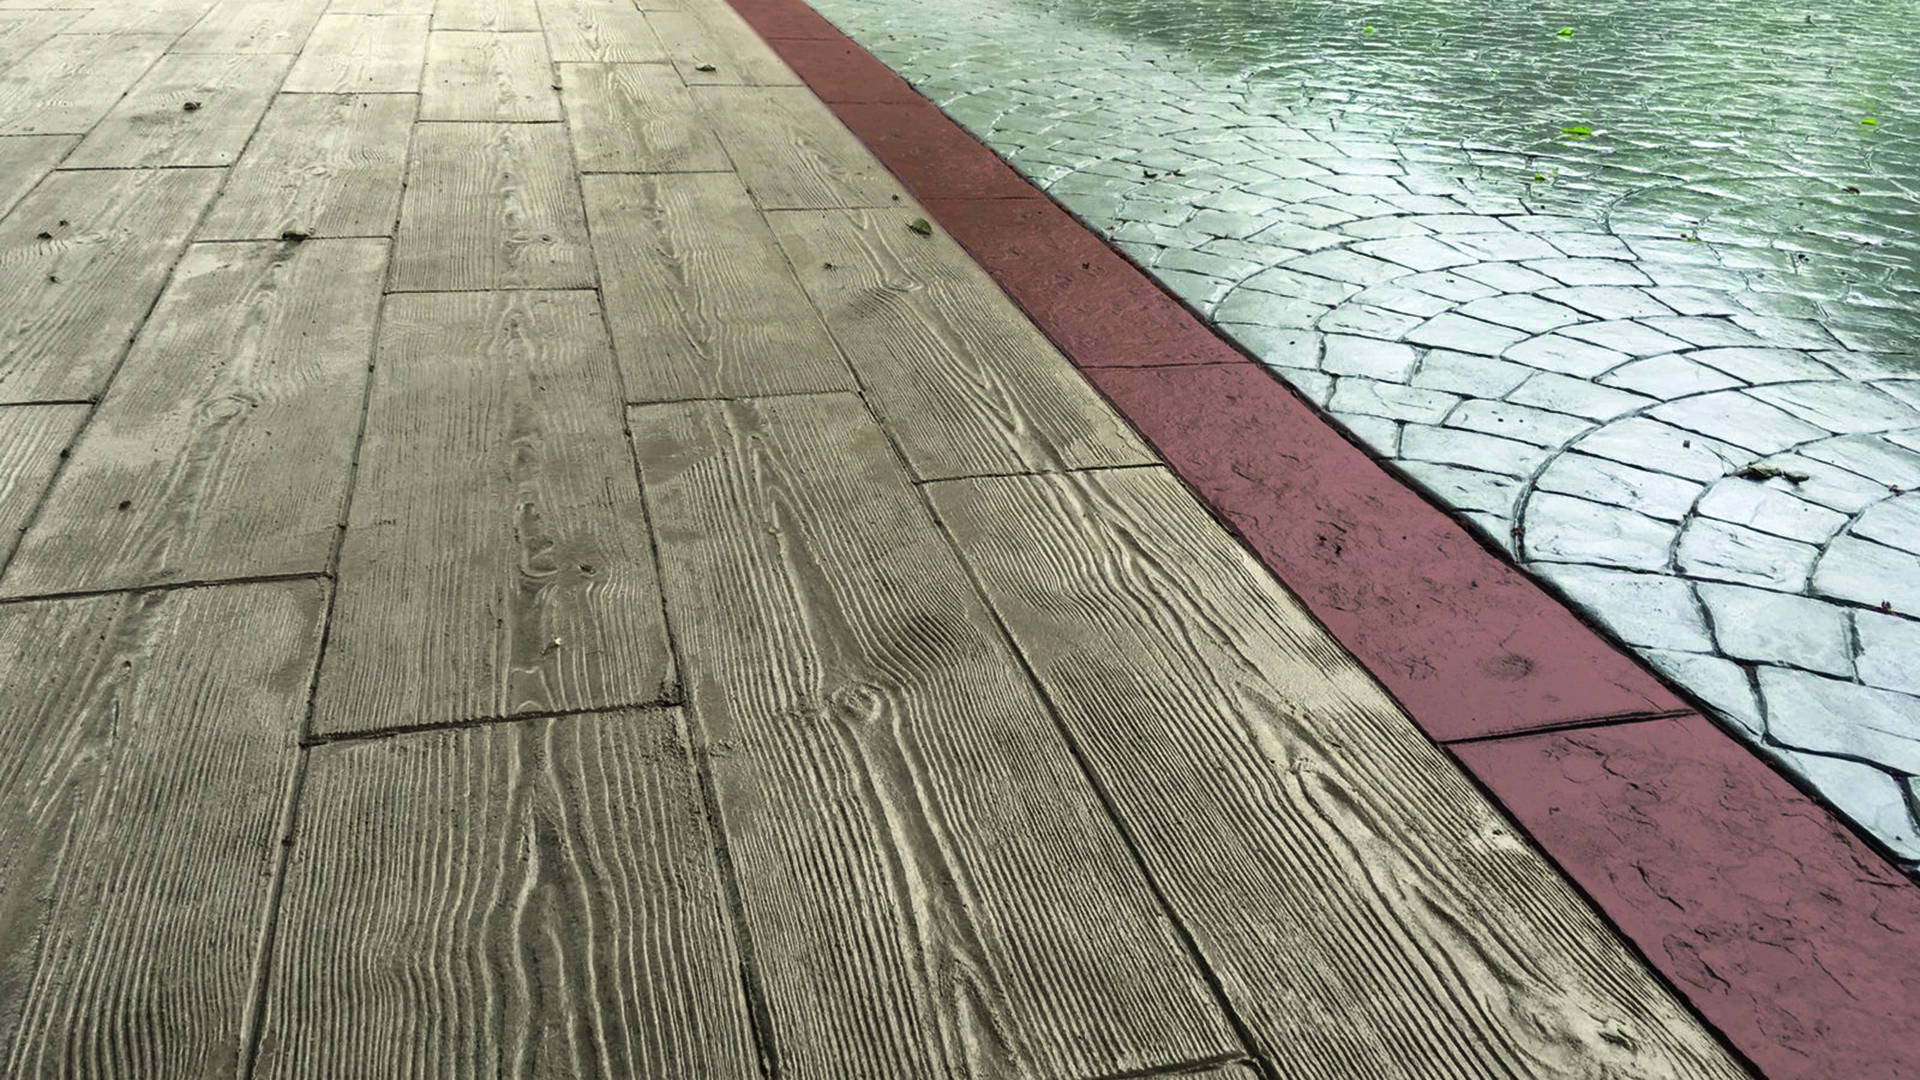 urbanisation with imitation wood imprinted concrete floor